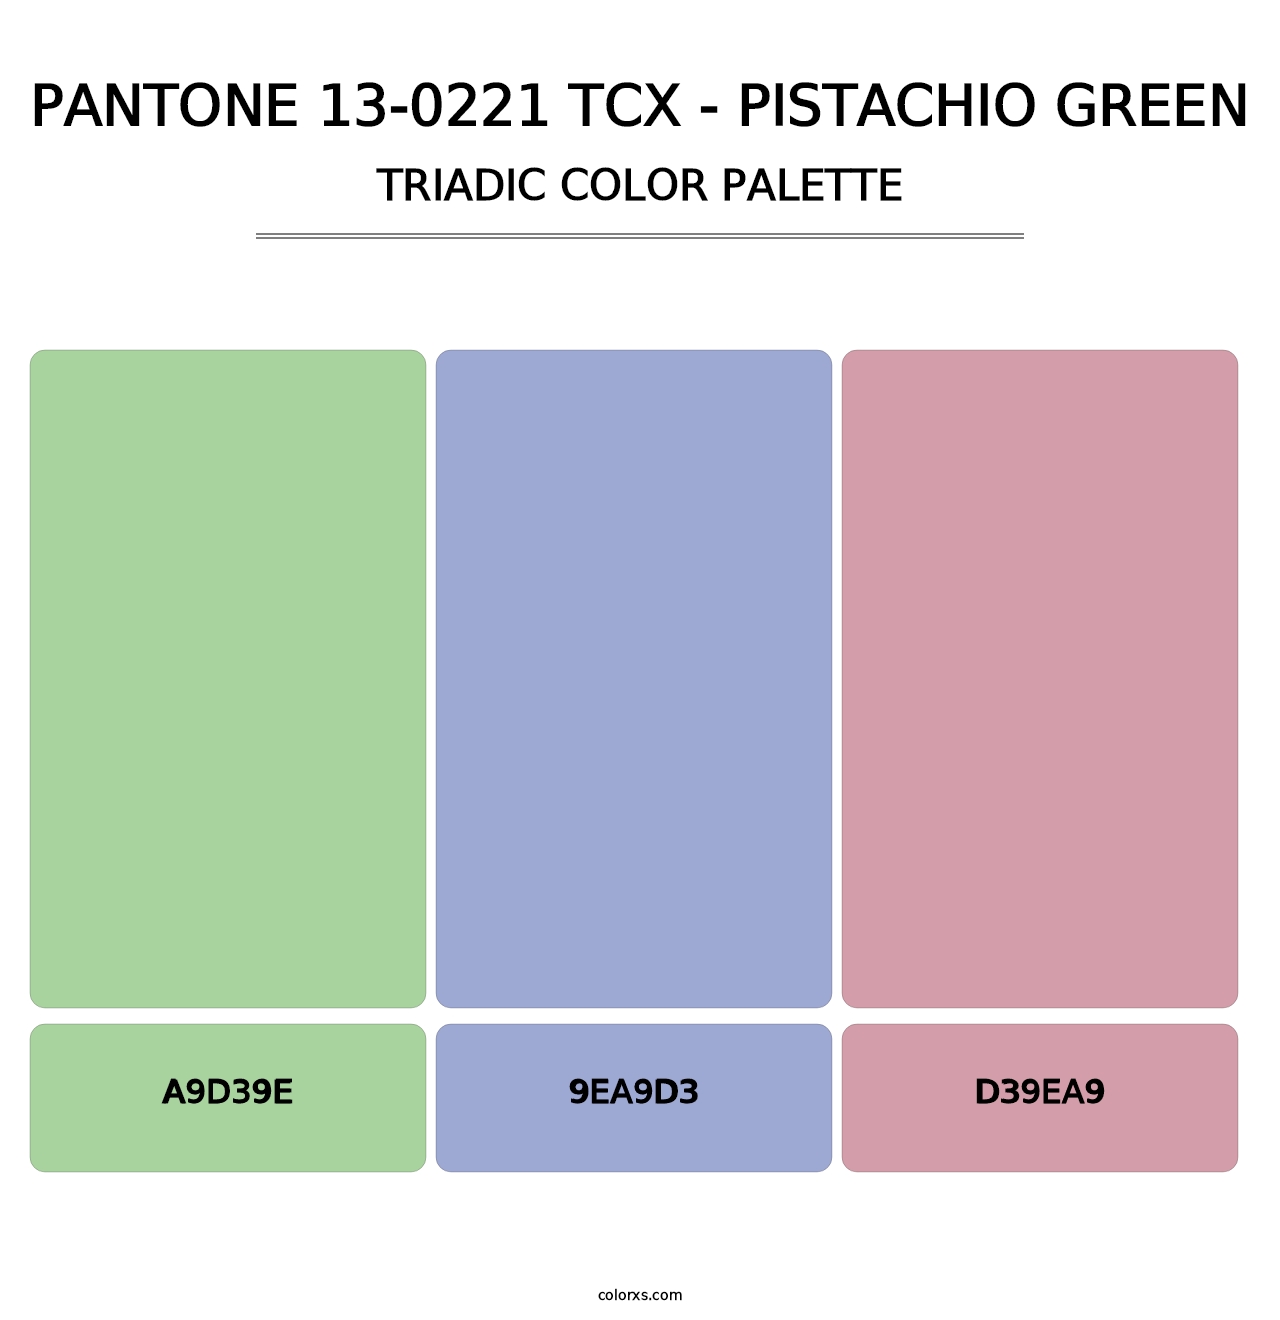 PANTONE 13-0221 TCX - Pistachio Green - Triadic Color Palette